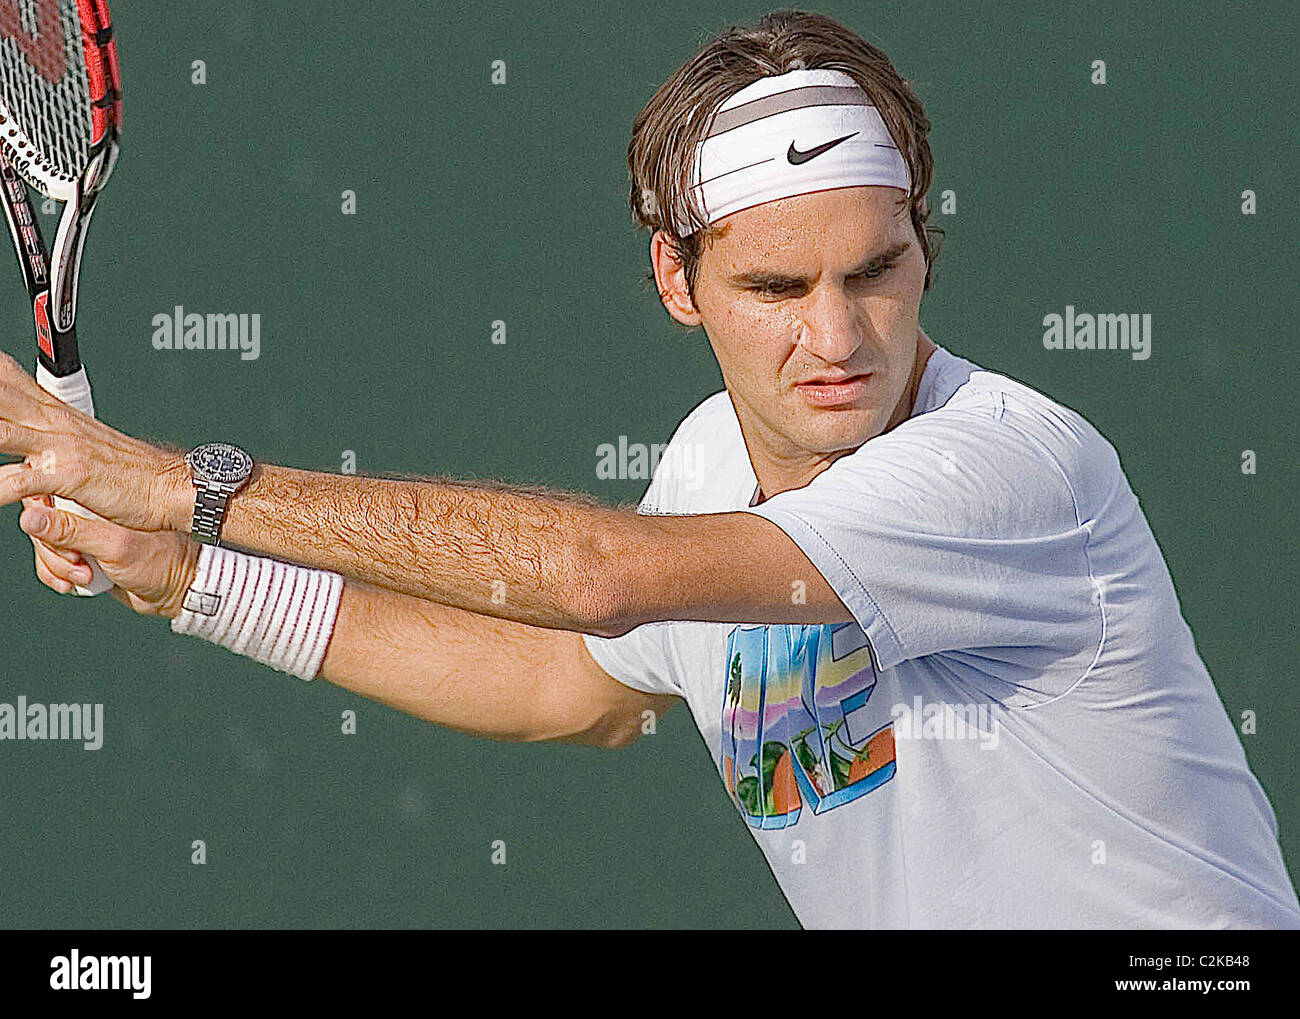 Roger Federer 2008 Pacific Life Open Torneo de Tenis de Indian Wells,  California - 12.03.08 Mateo Hynes Fotografía de stock - Alamy